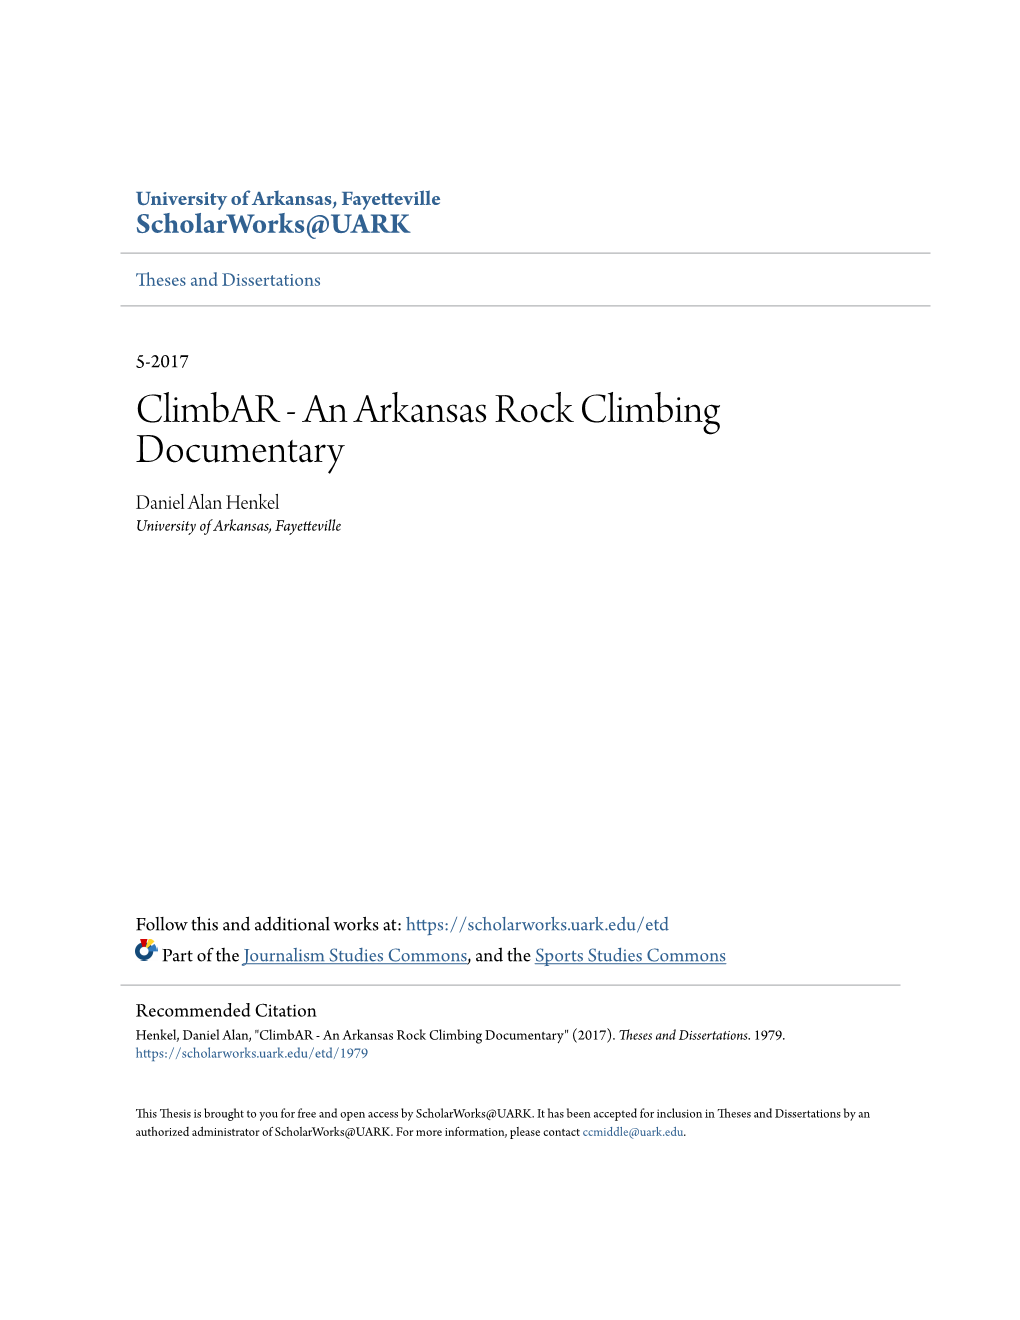 An Arkansas Rock Climbing Documentary Daniel Alan Henkel University of Arkansas, Fayetteville